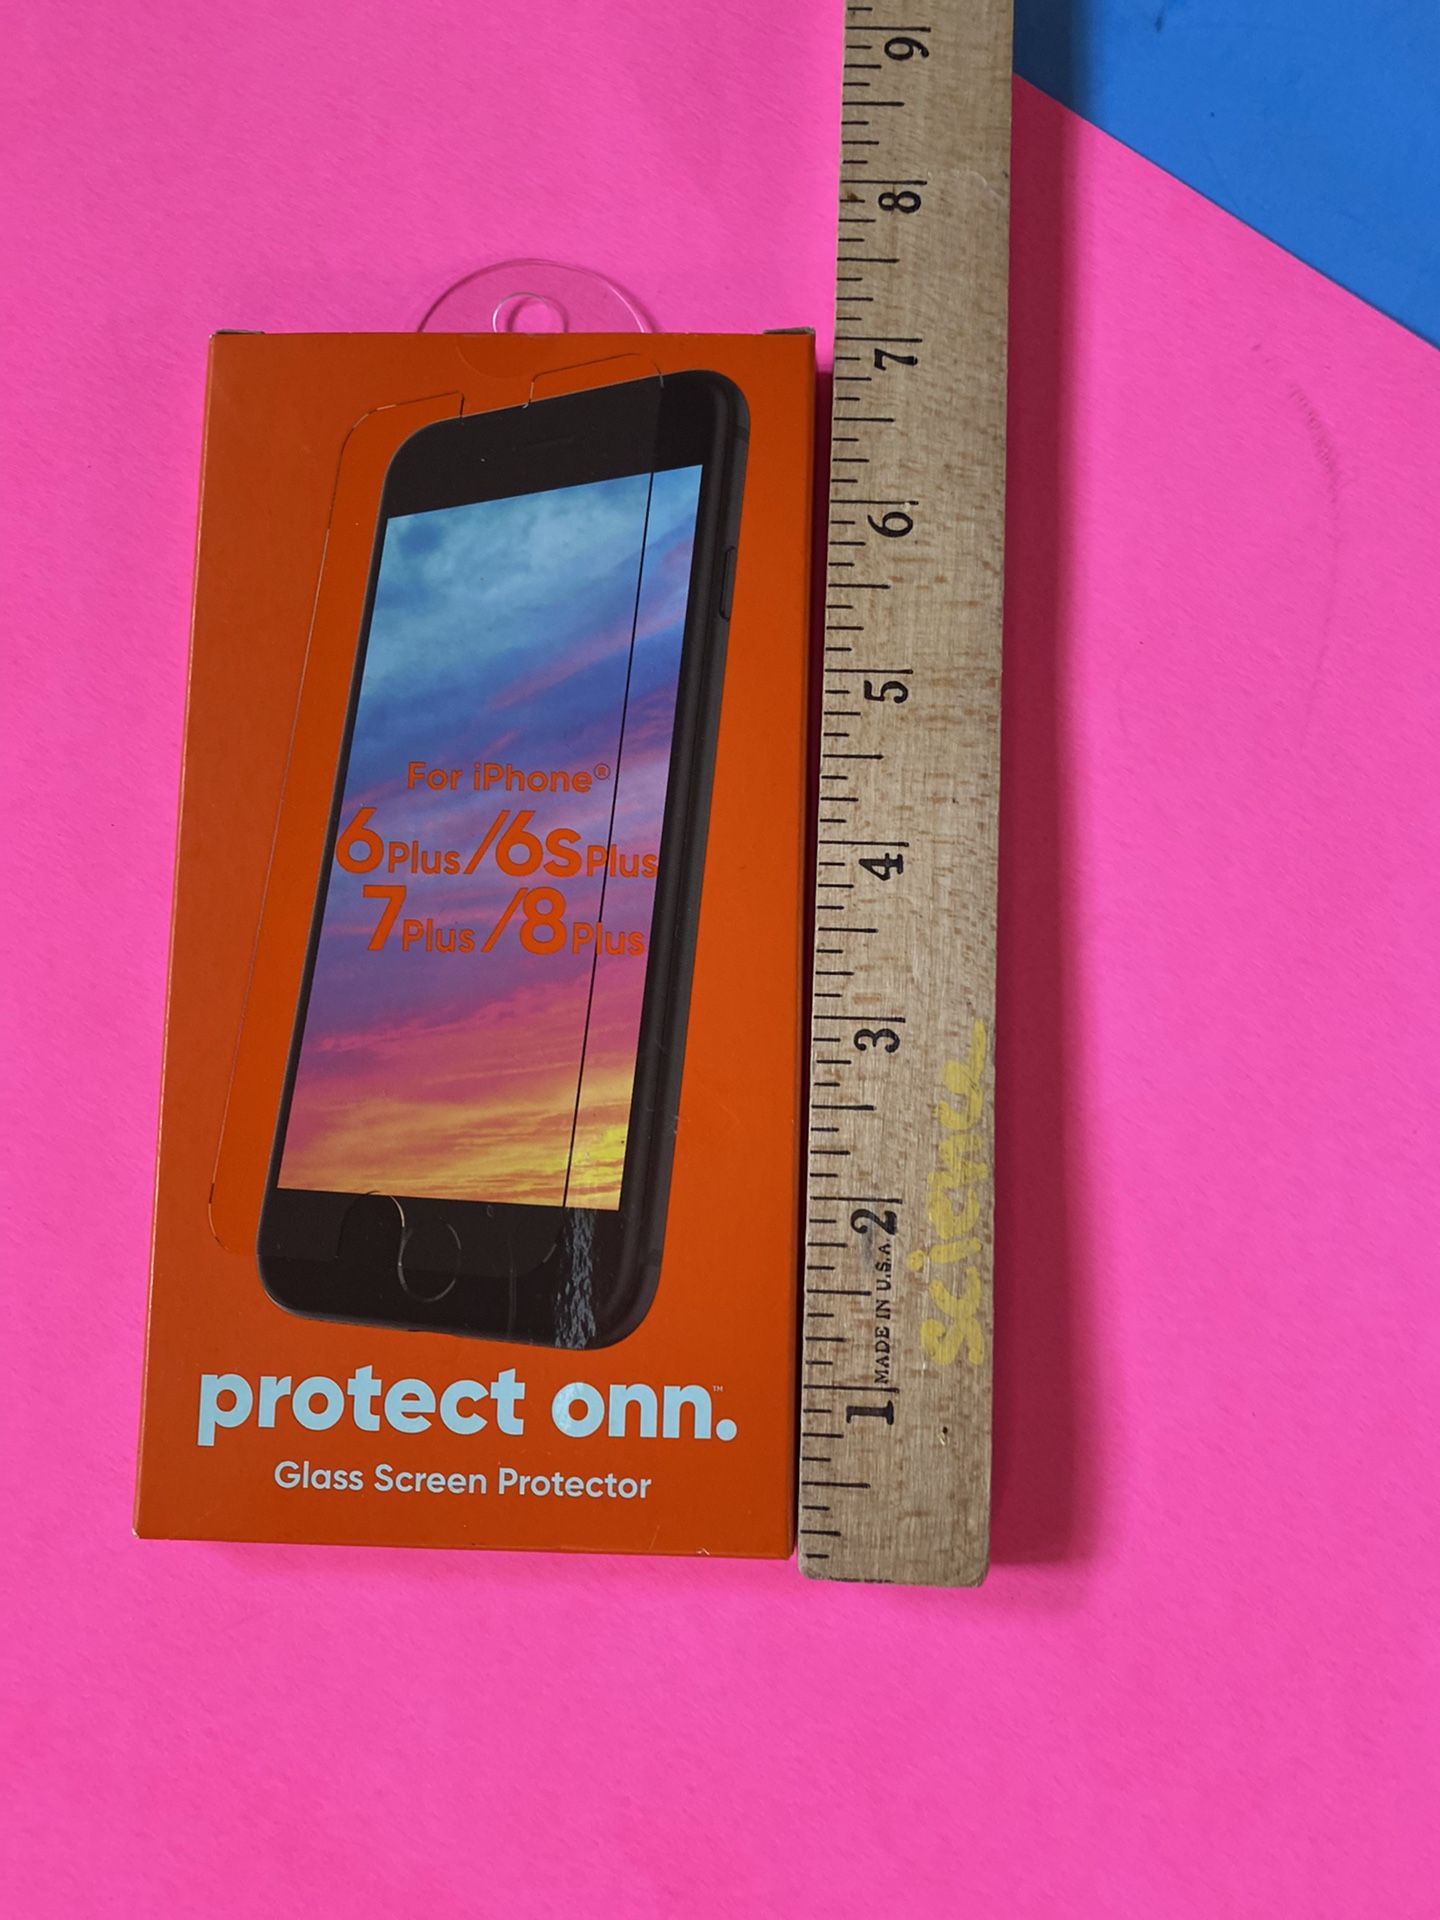 Glass Screen Protector iPhone 6S Plus, Etc